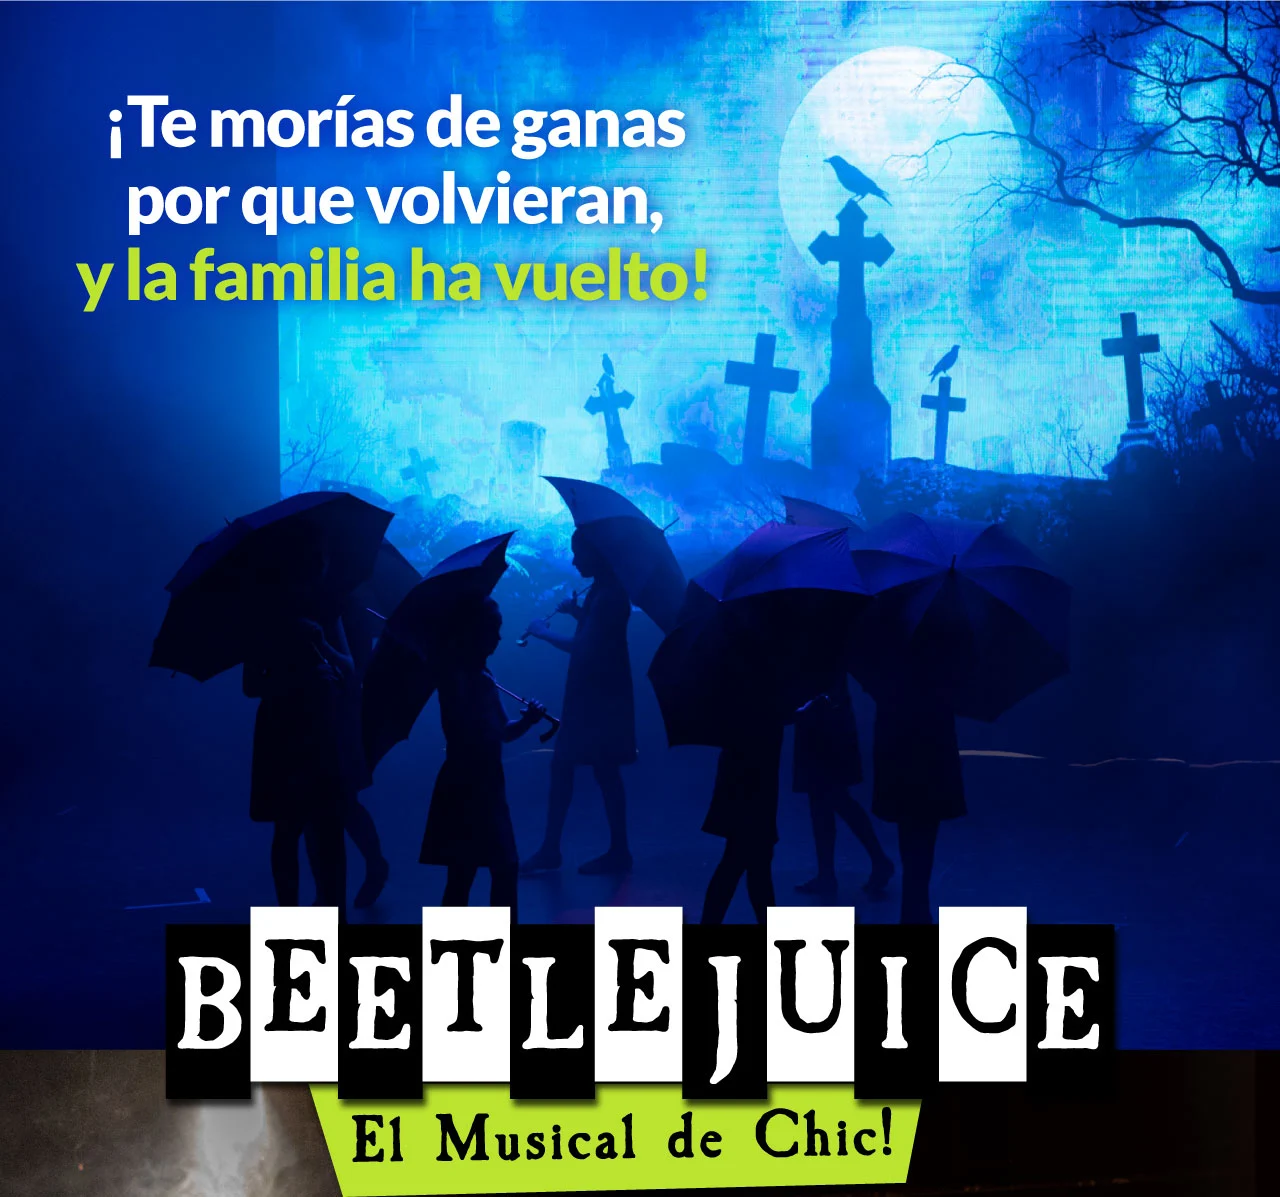 Beetlejuice Teatro Musical